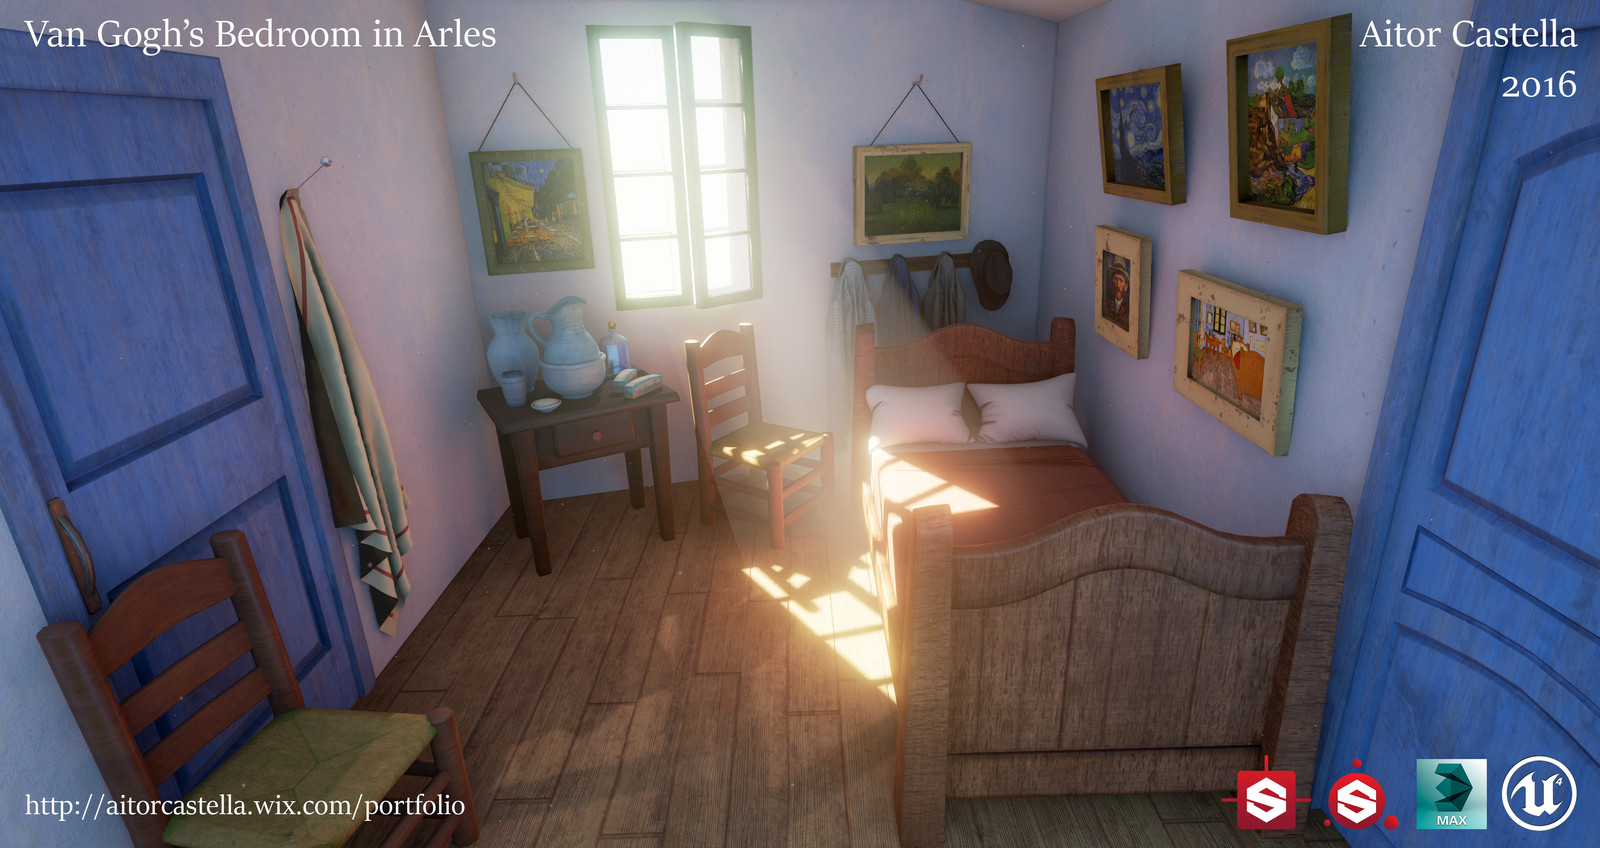 Van Gogh Bedroom At Arles Home Design Ideas,Mini Fridge For Bedroom Ideas